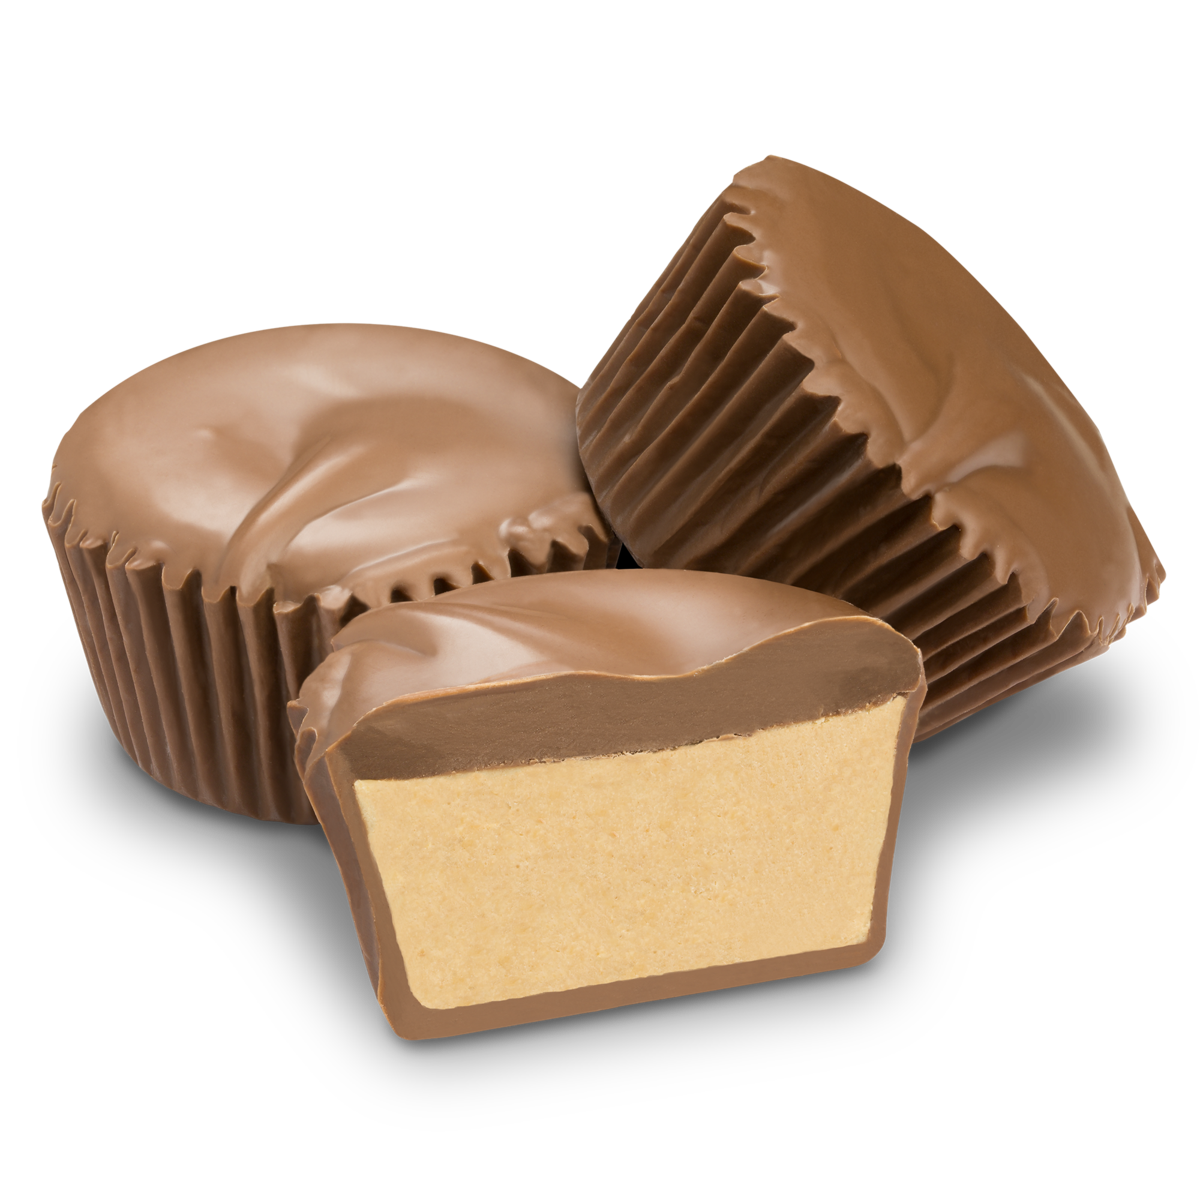 Dark Chocolate Giant Peanut Butter Cups - 1 lb. Box